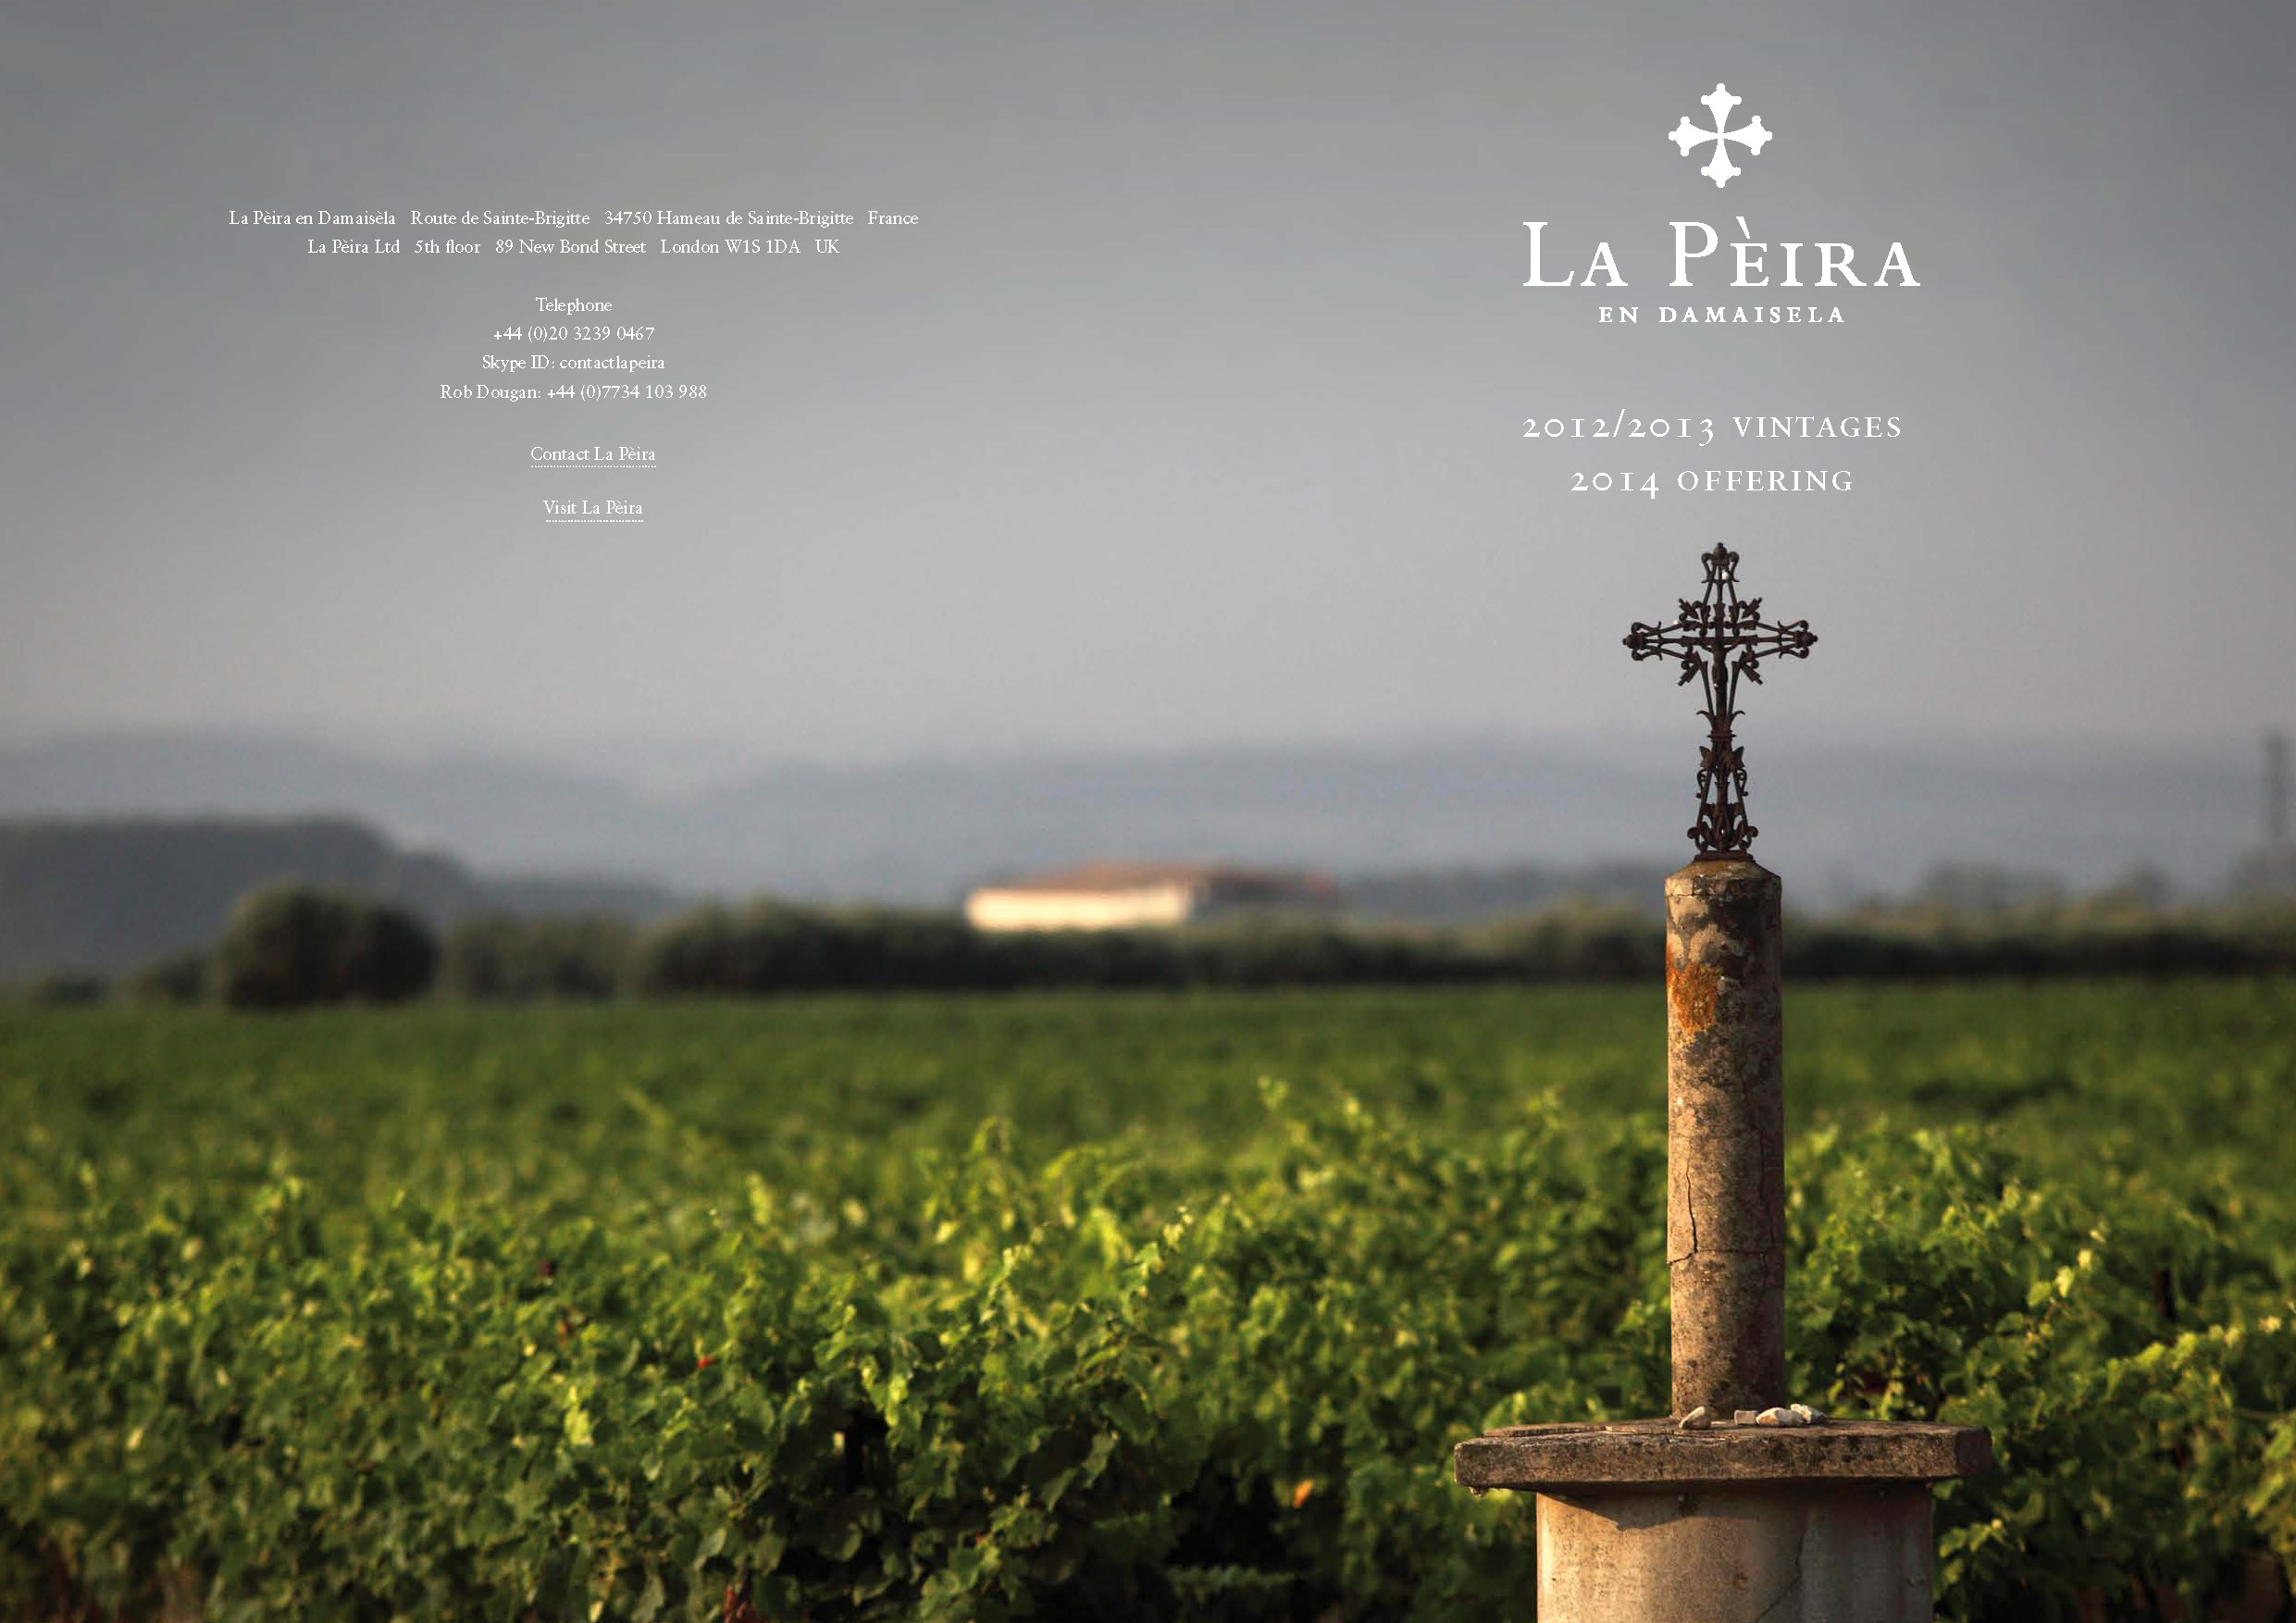 A Look at La Peira's 2012-2013 offering La Peira